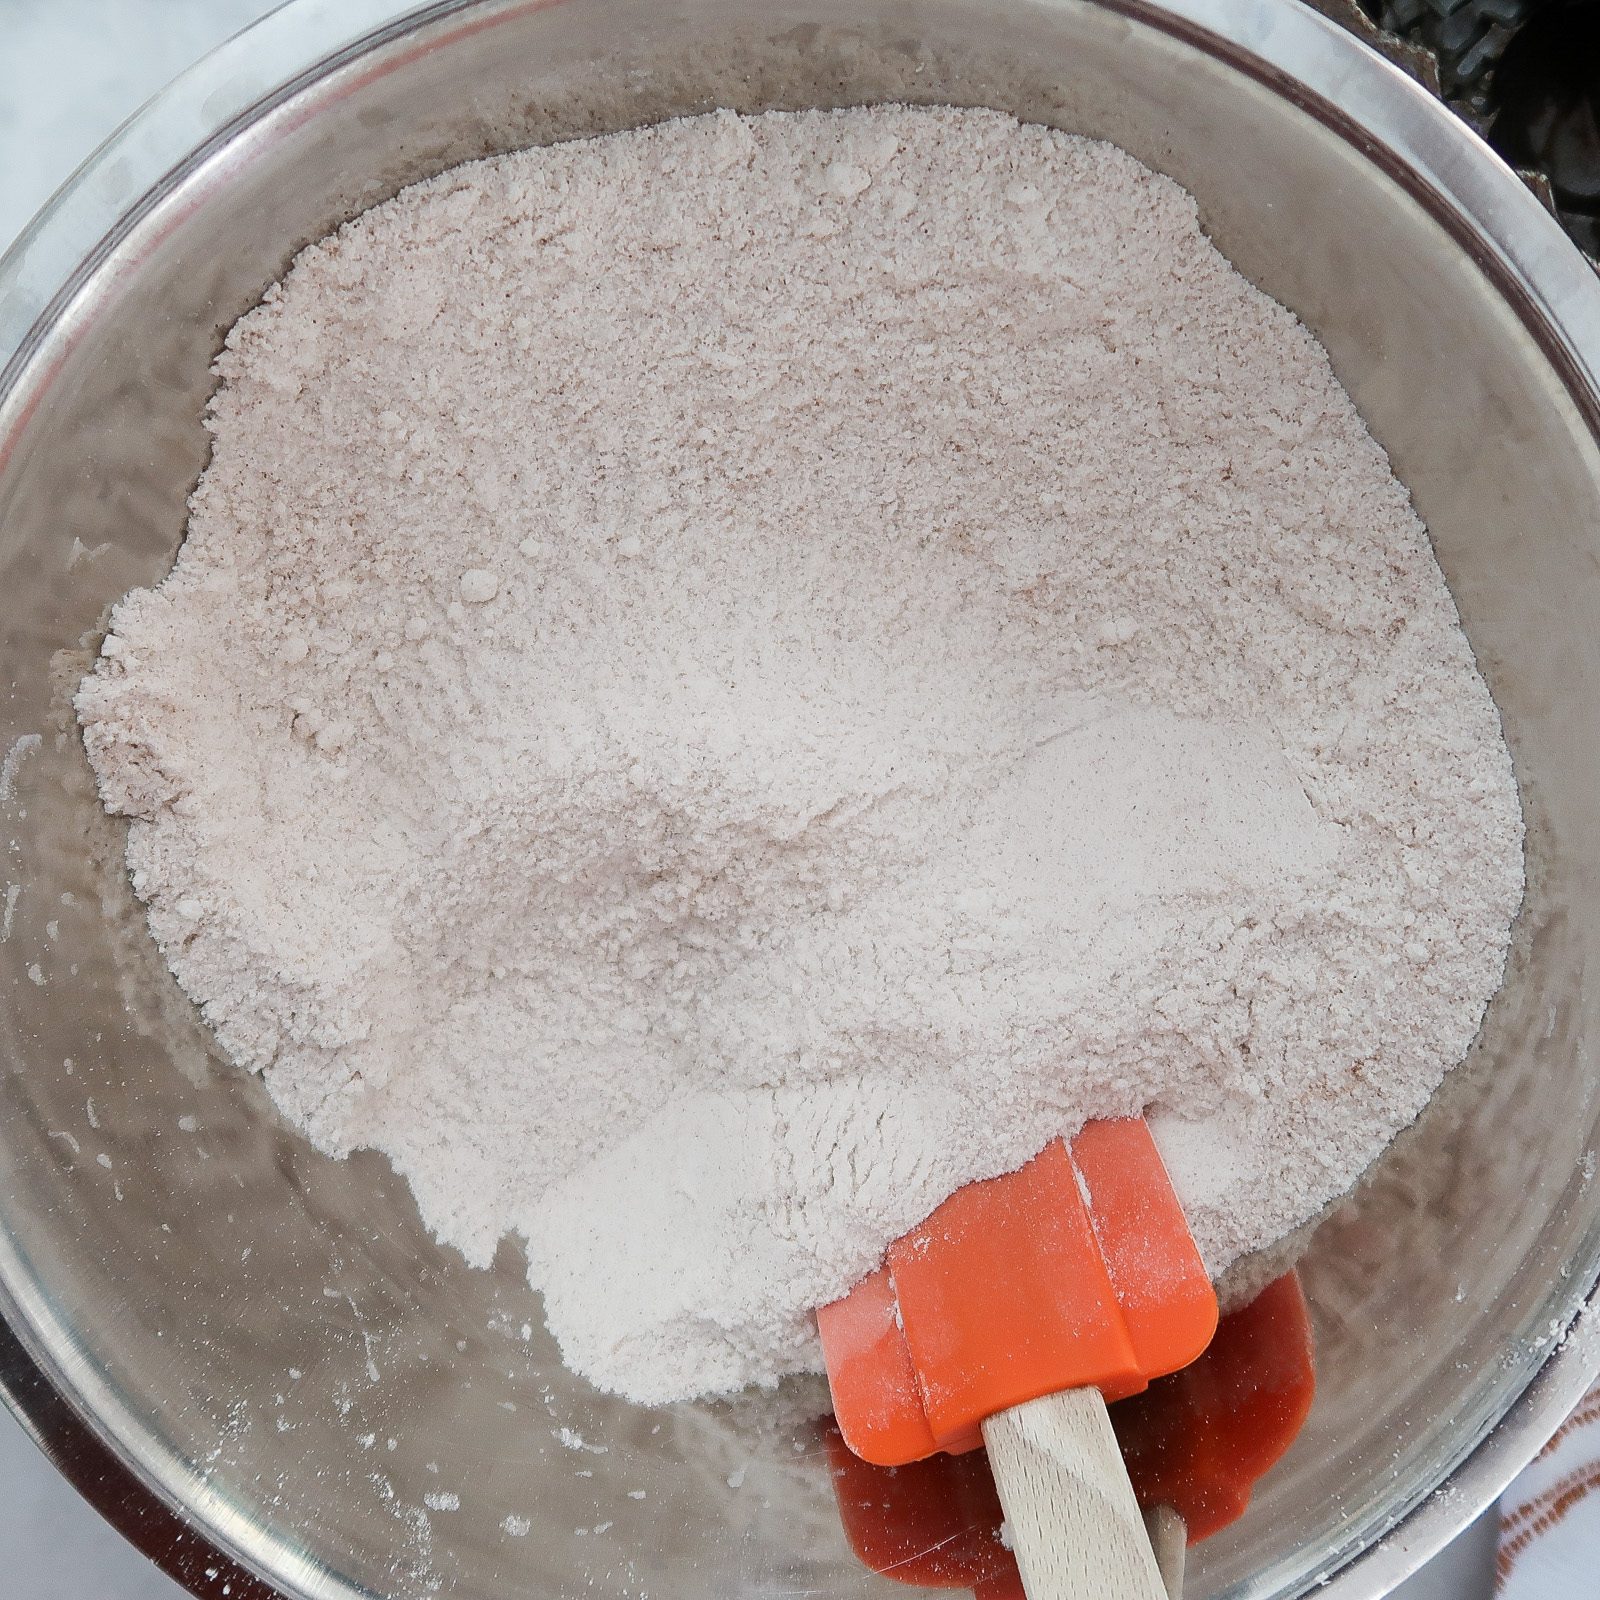 Mixing flour and sugar